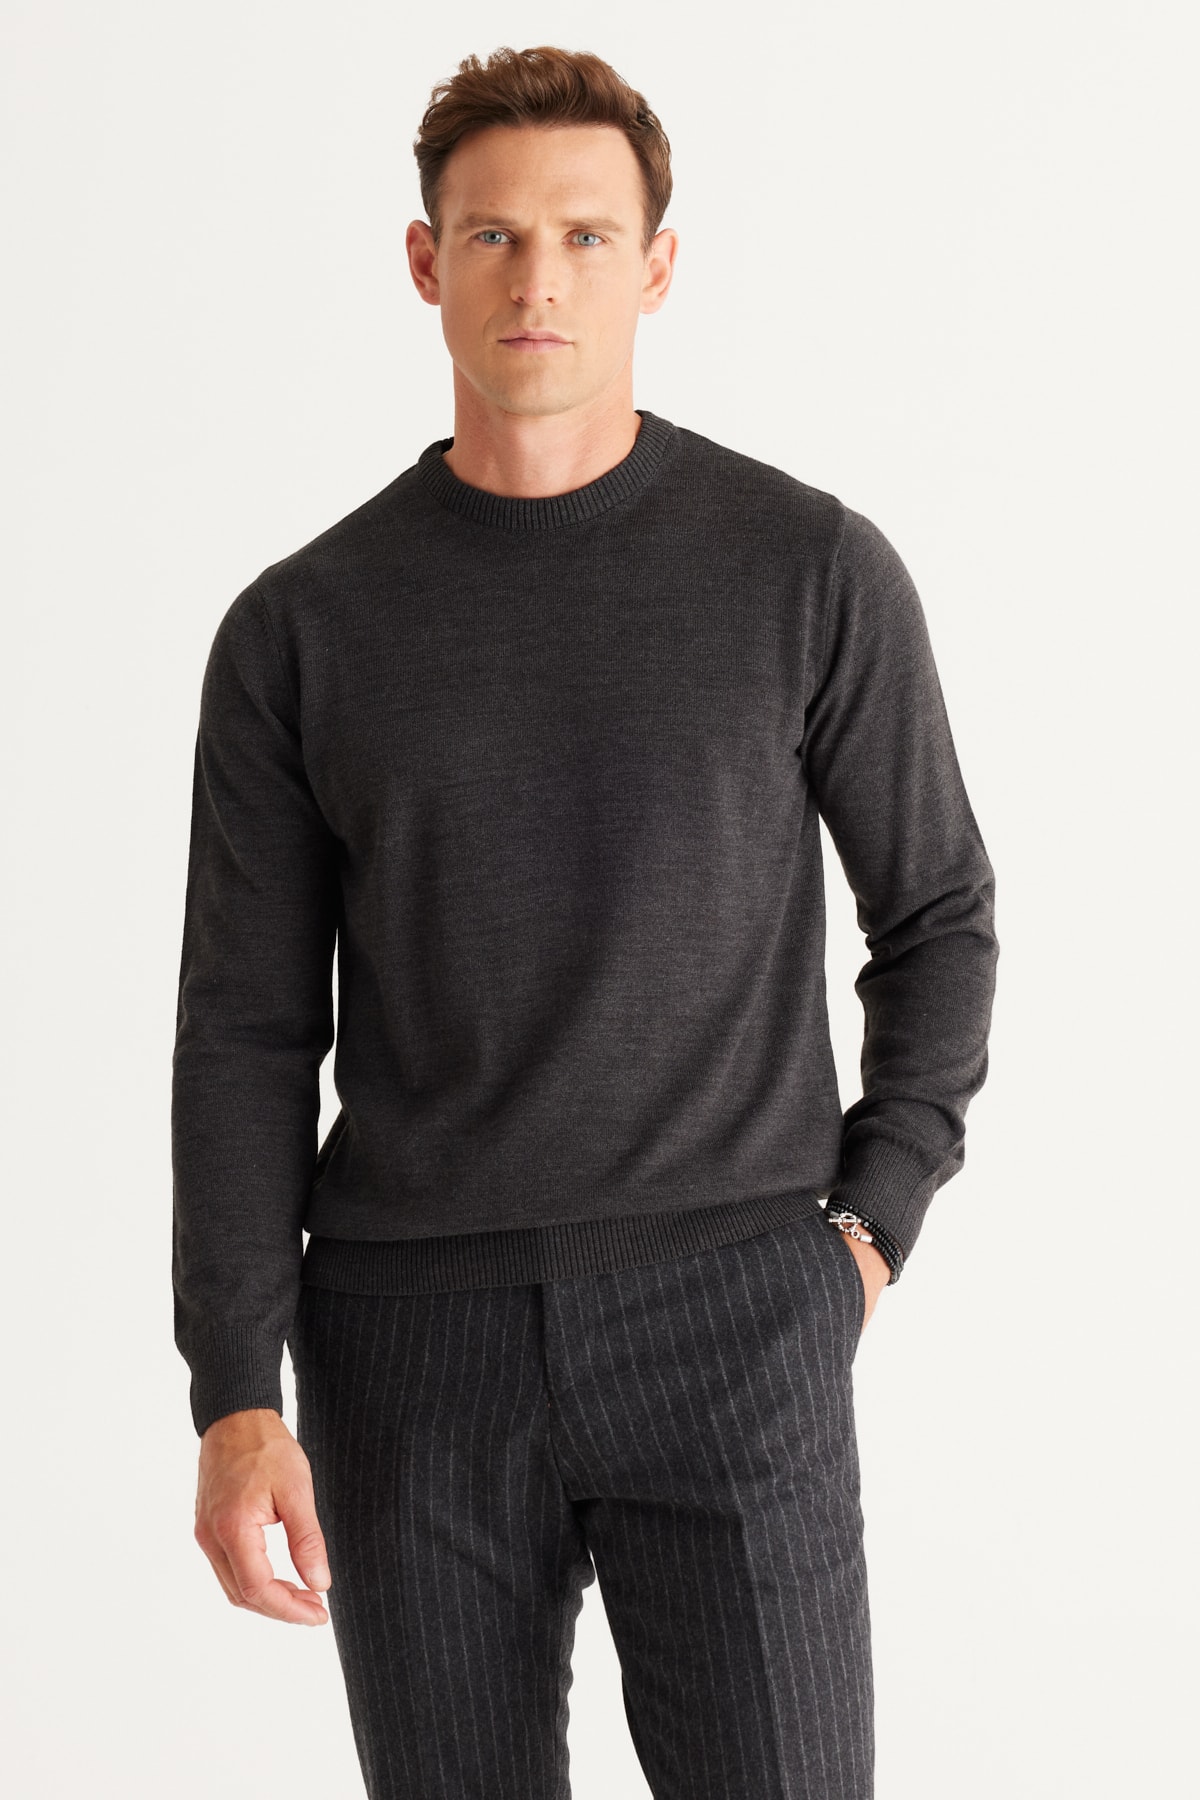 ALTINYILDIZ CLASSICS Men's Anthracite-melange Standard Fit Normal Cut Crew Neck Knitwear Sweater.